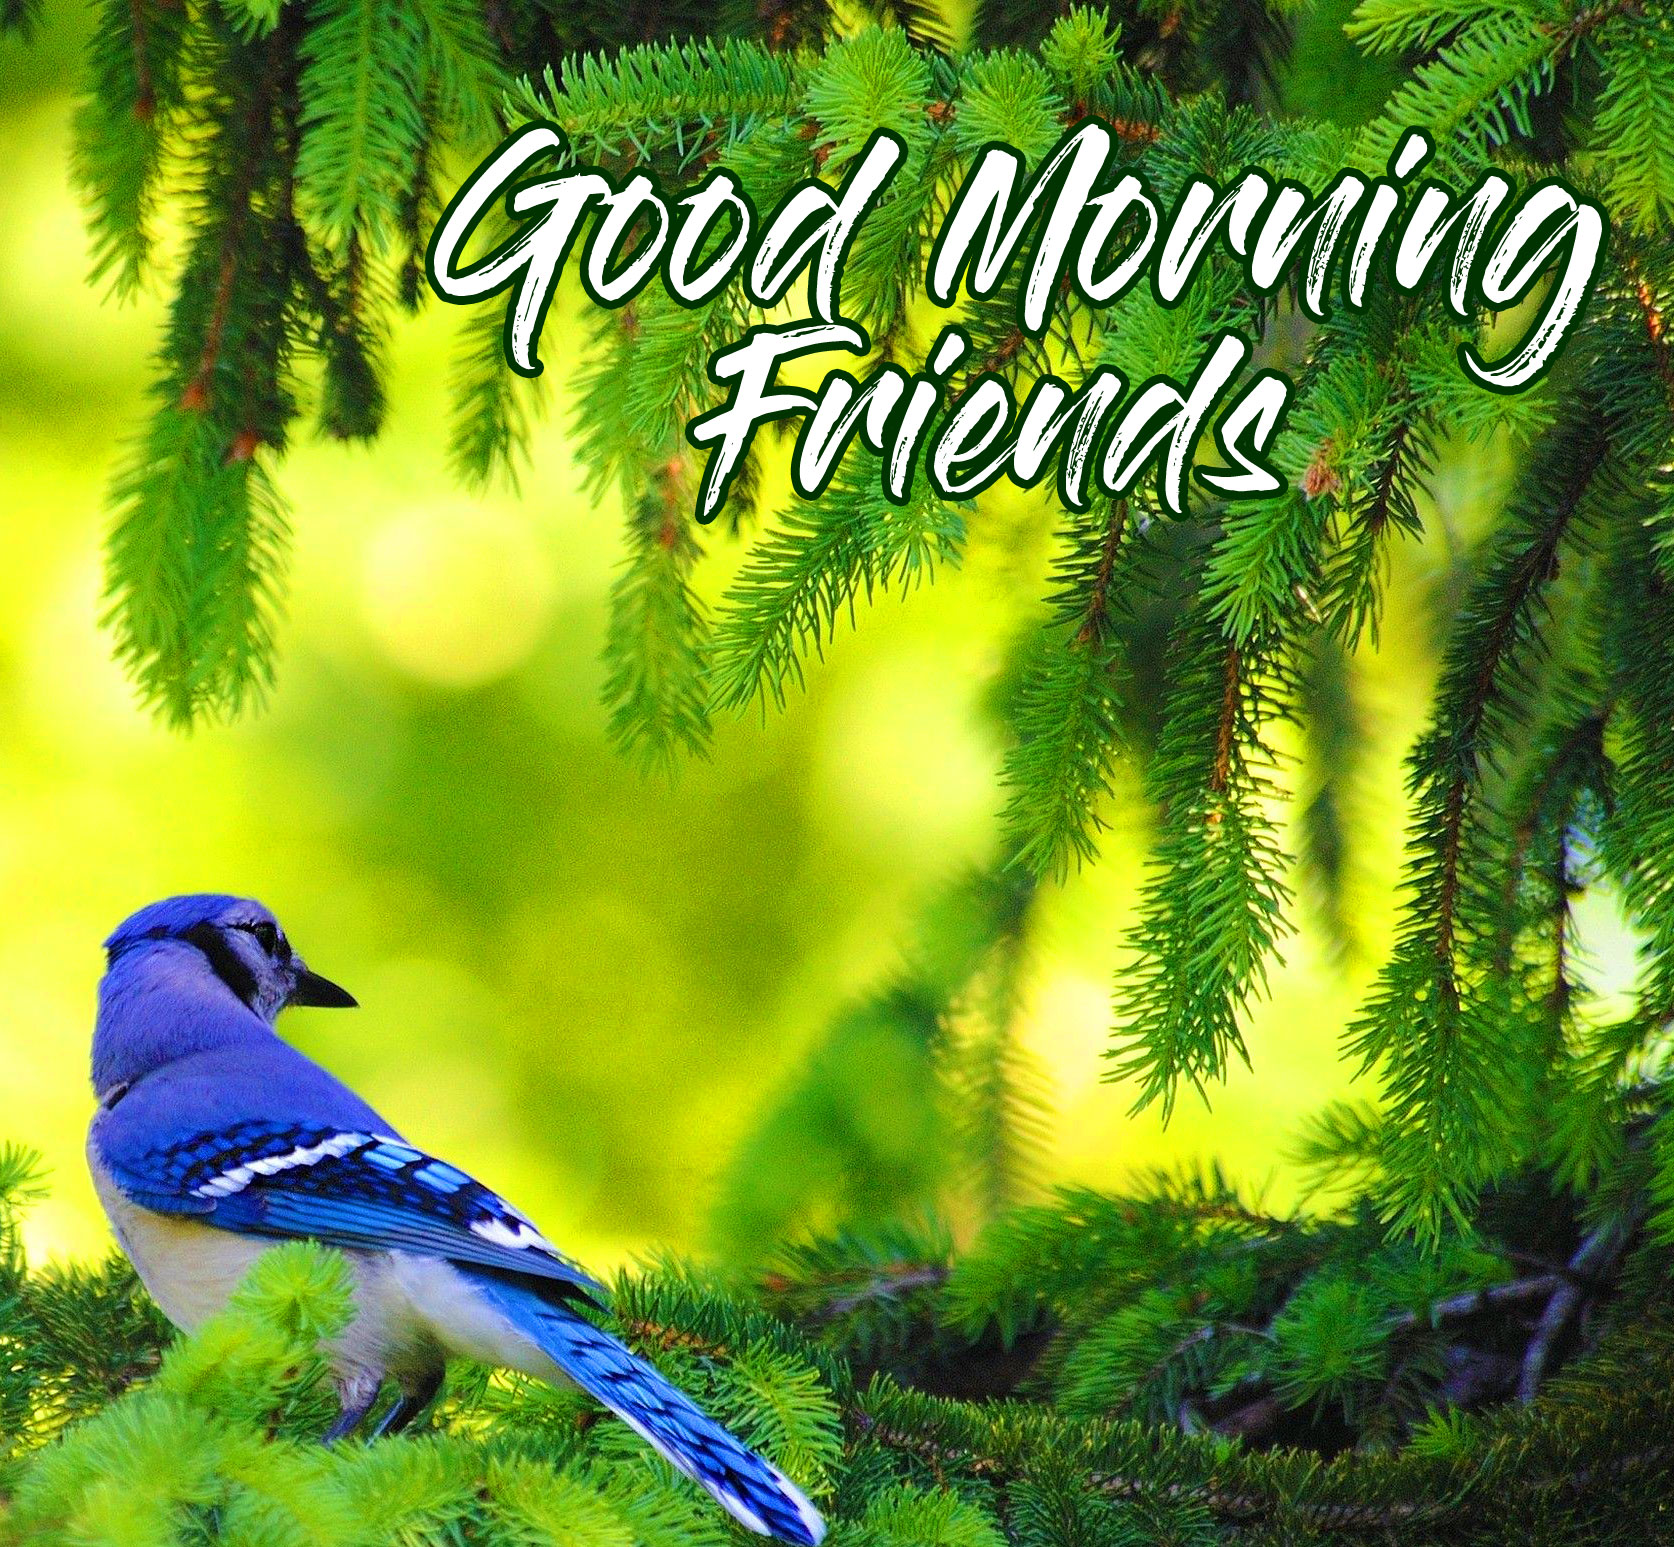 Good Morning Friends Images Wallpaper Pics Download 